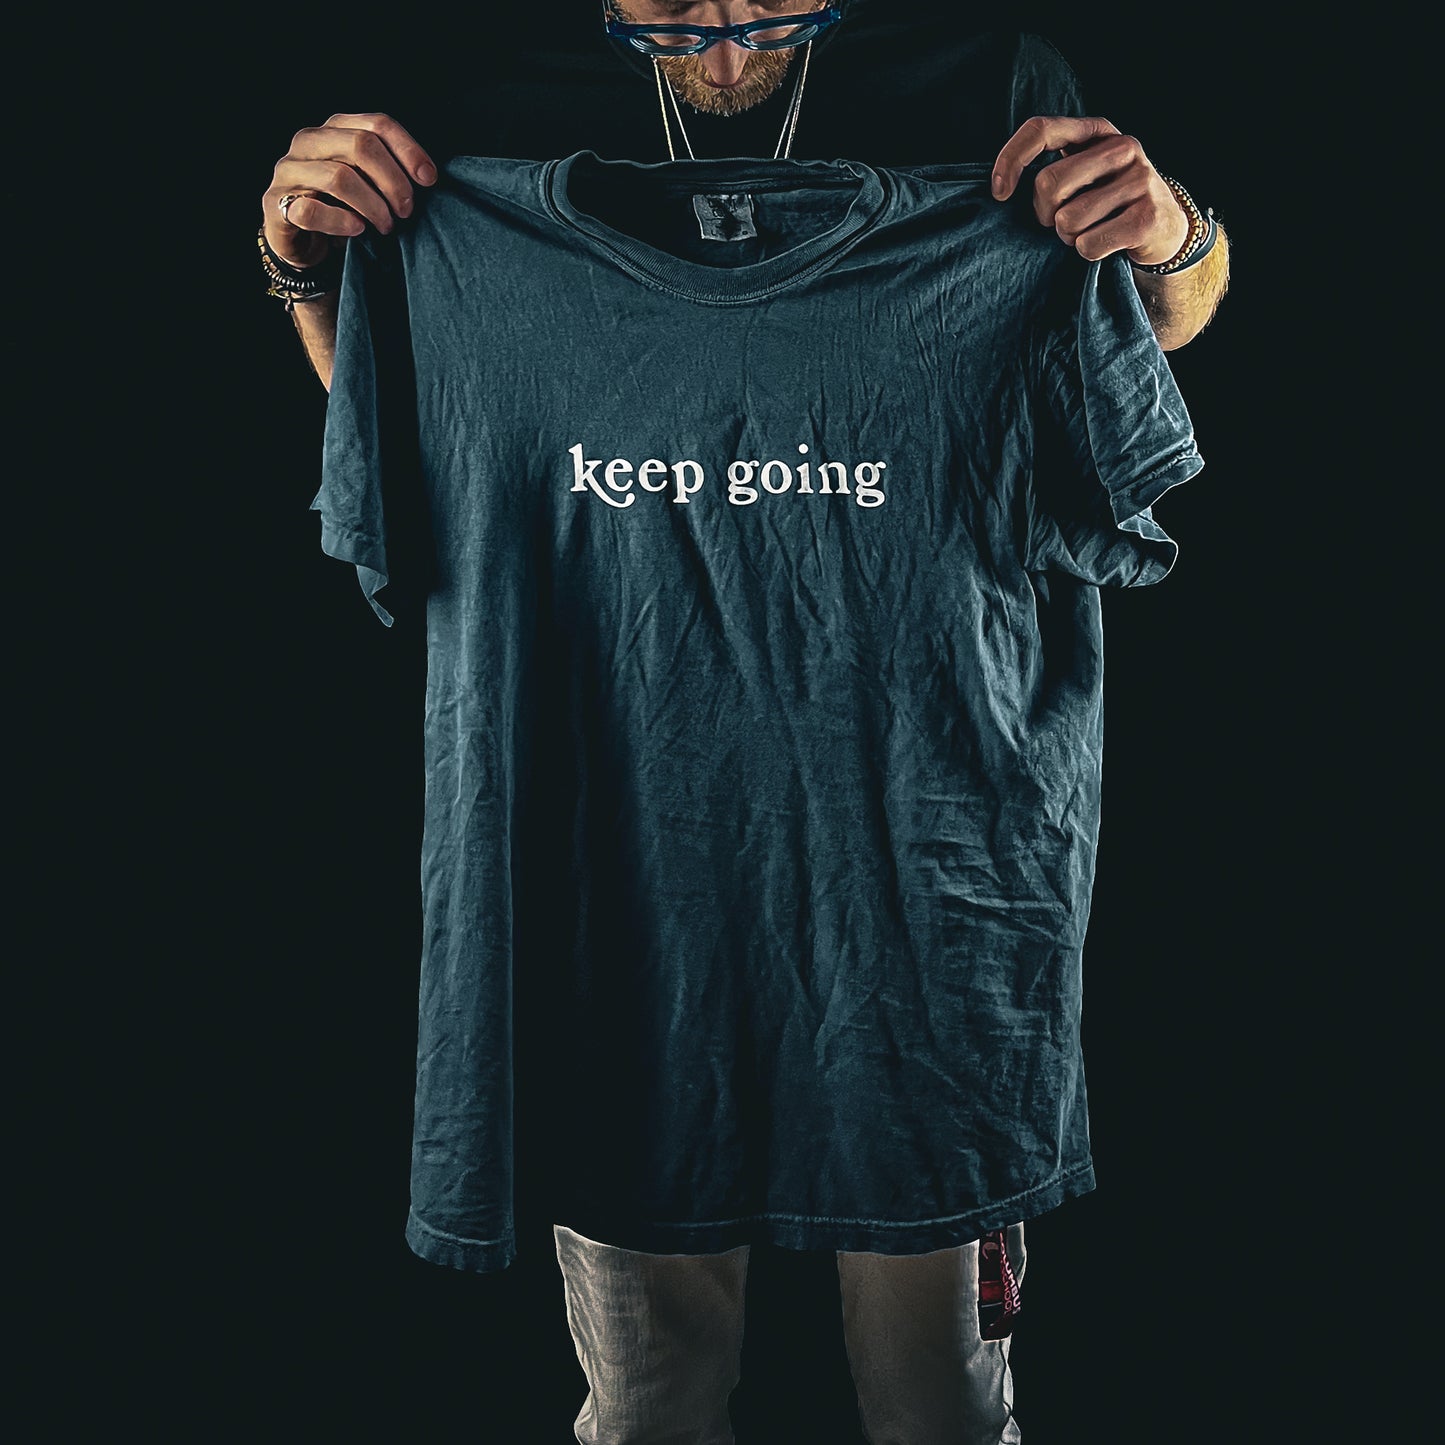 the keep going t-shirt